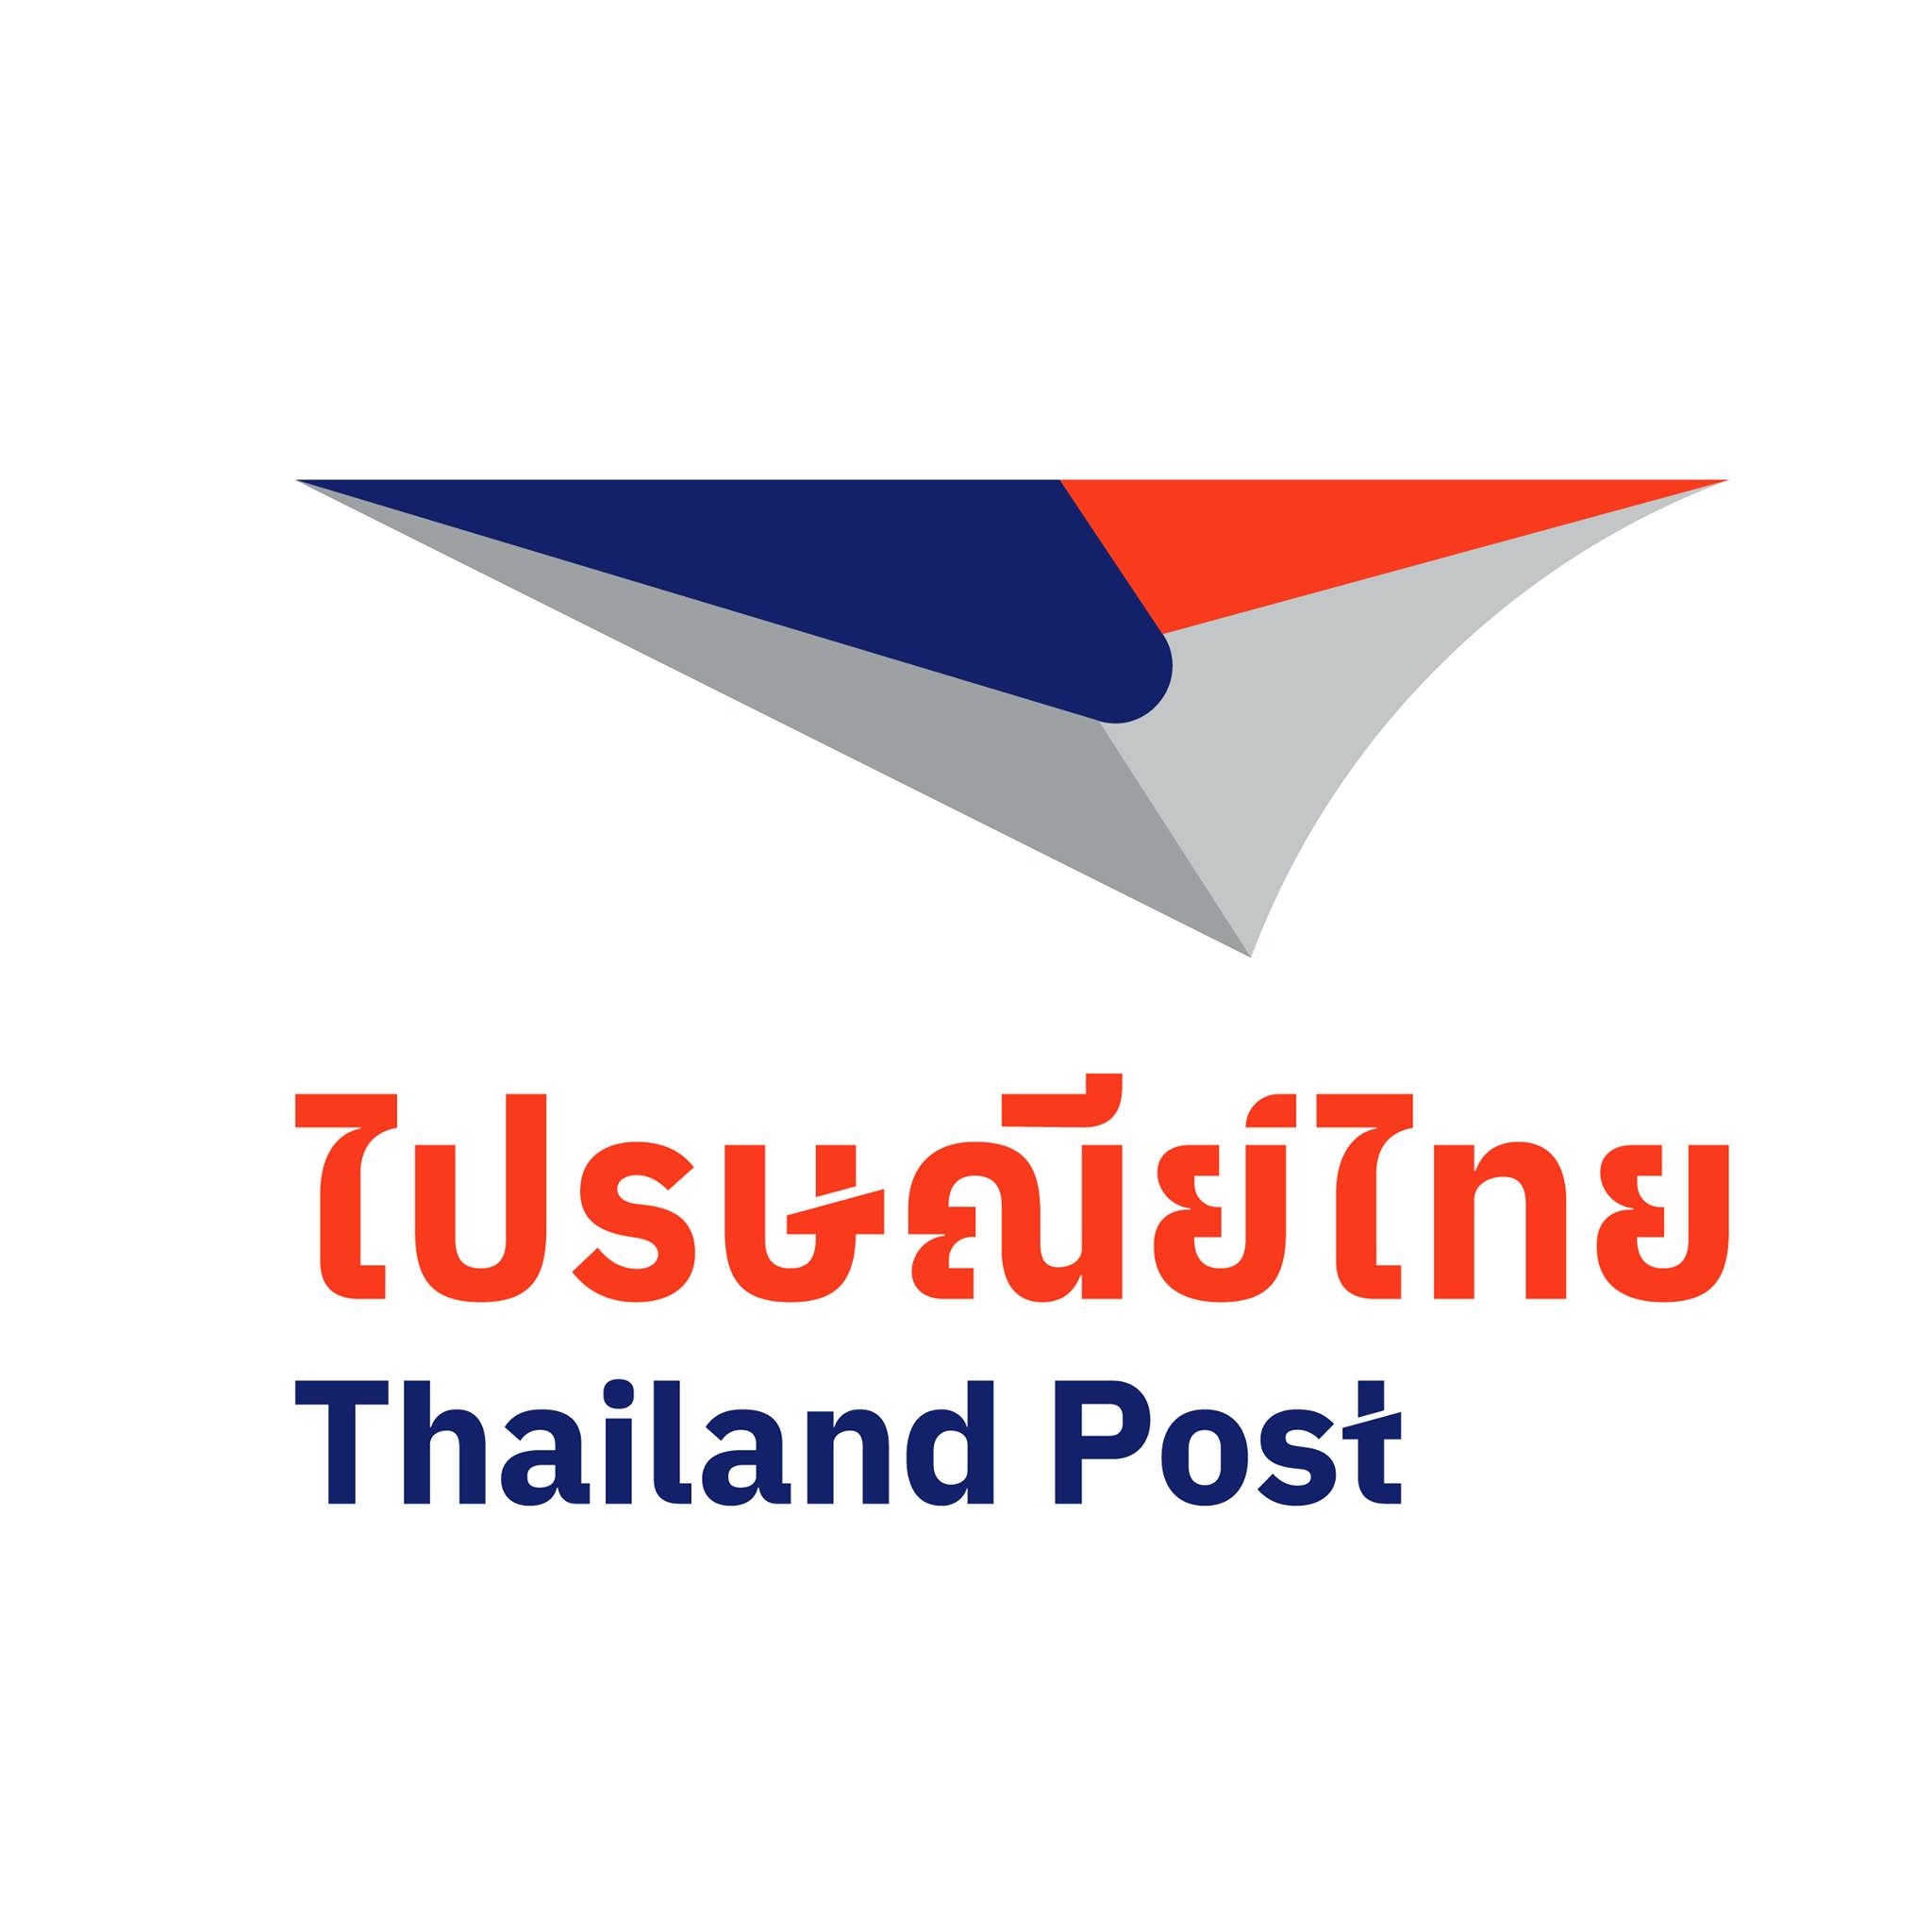 Thailand Post Co., Ltd